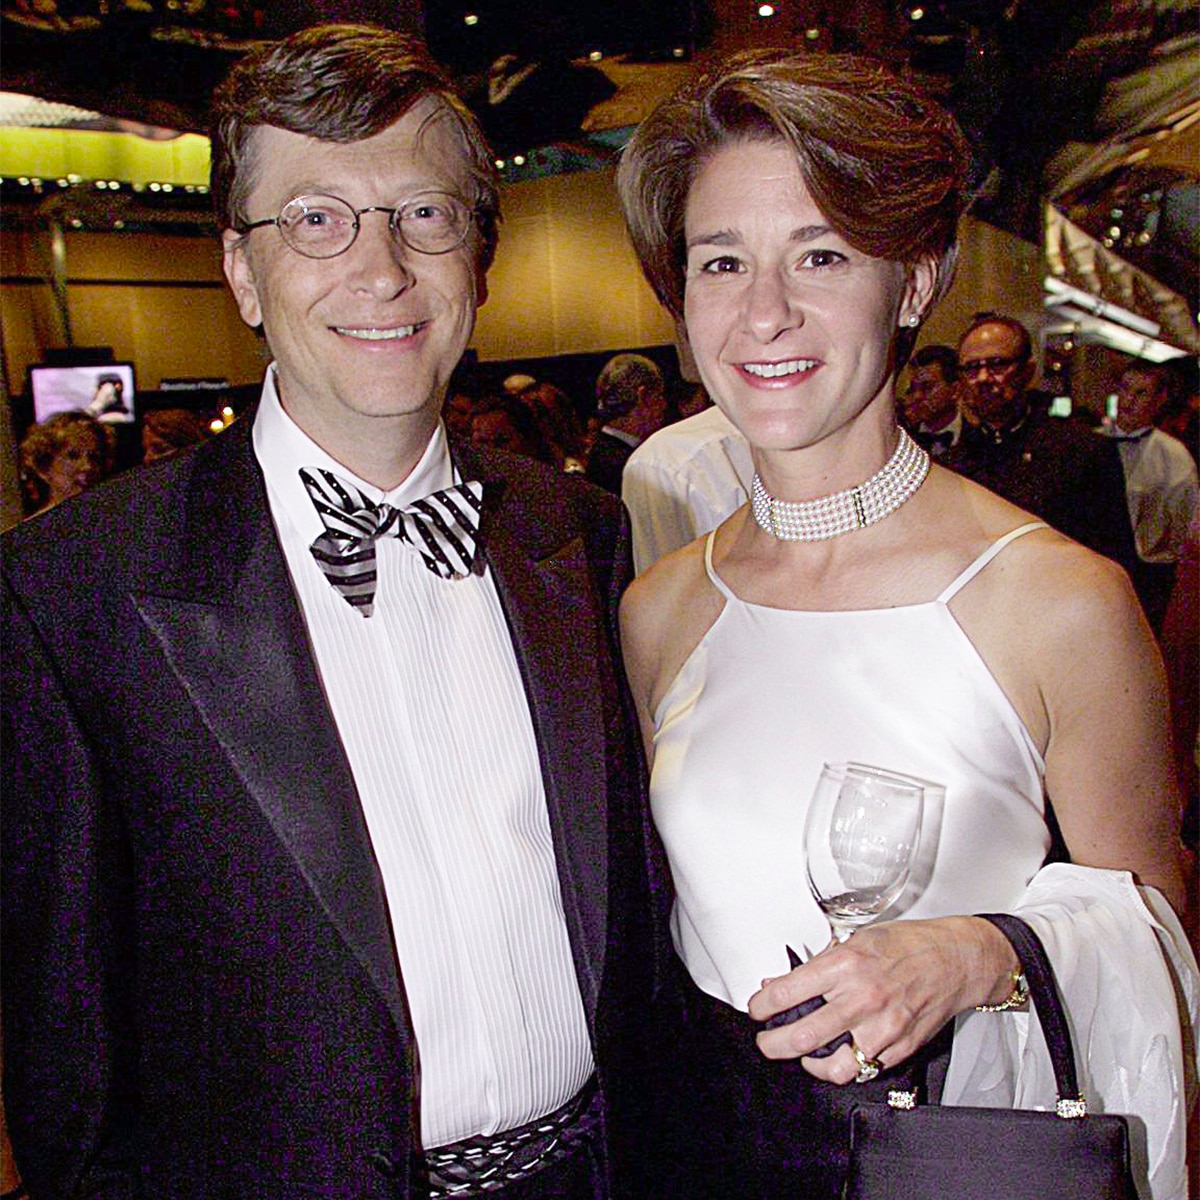 Жена билла гейтса. Билл и Мелинда Гейтс в молодости. Билл и Мелинда в молодости. Свадьба Мелинды и Билла Гейтса. Мелинда Гейтс в молодости.